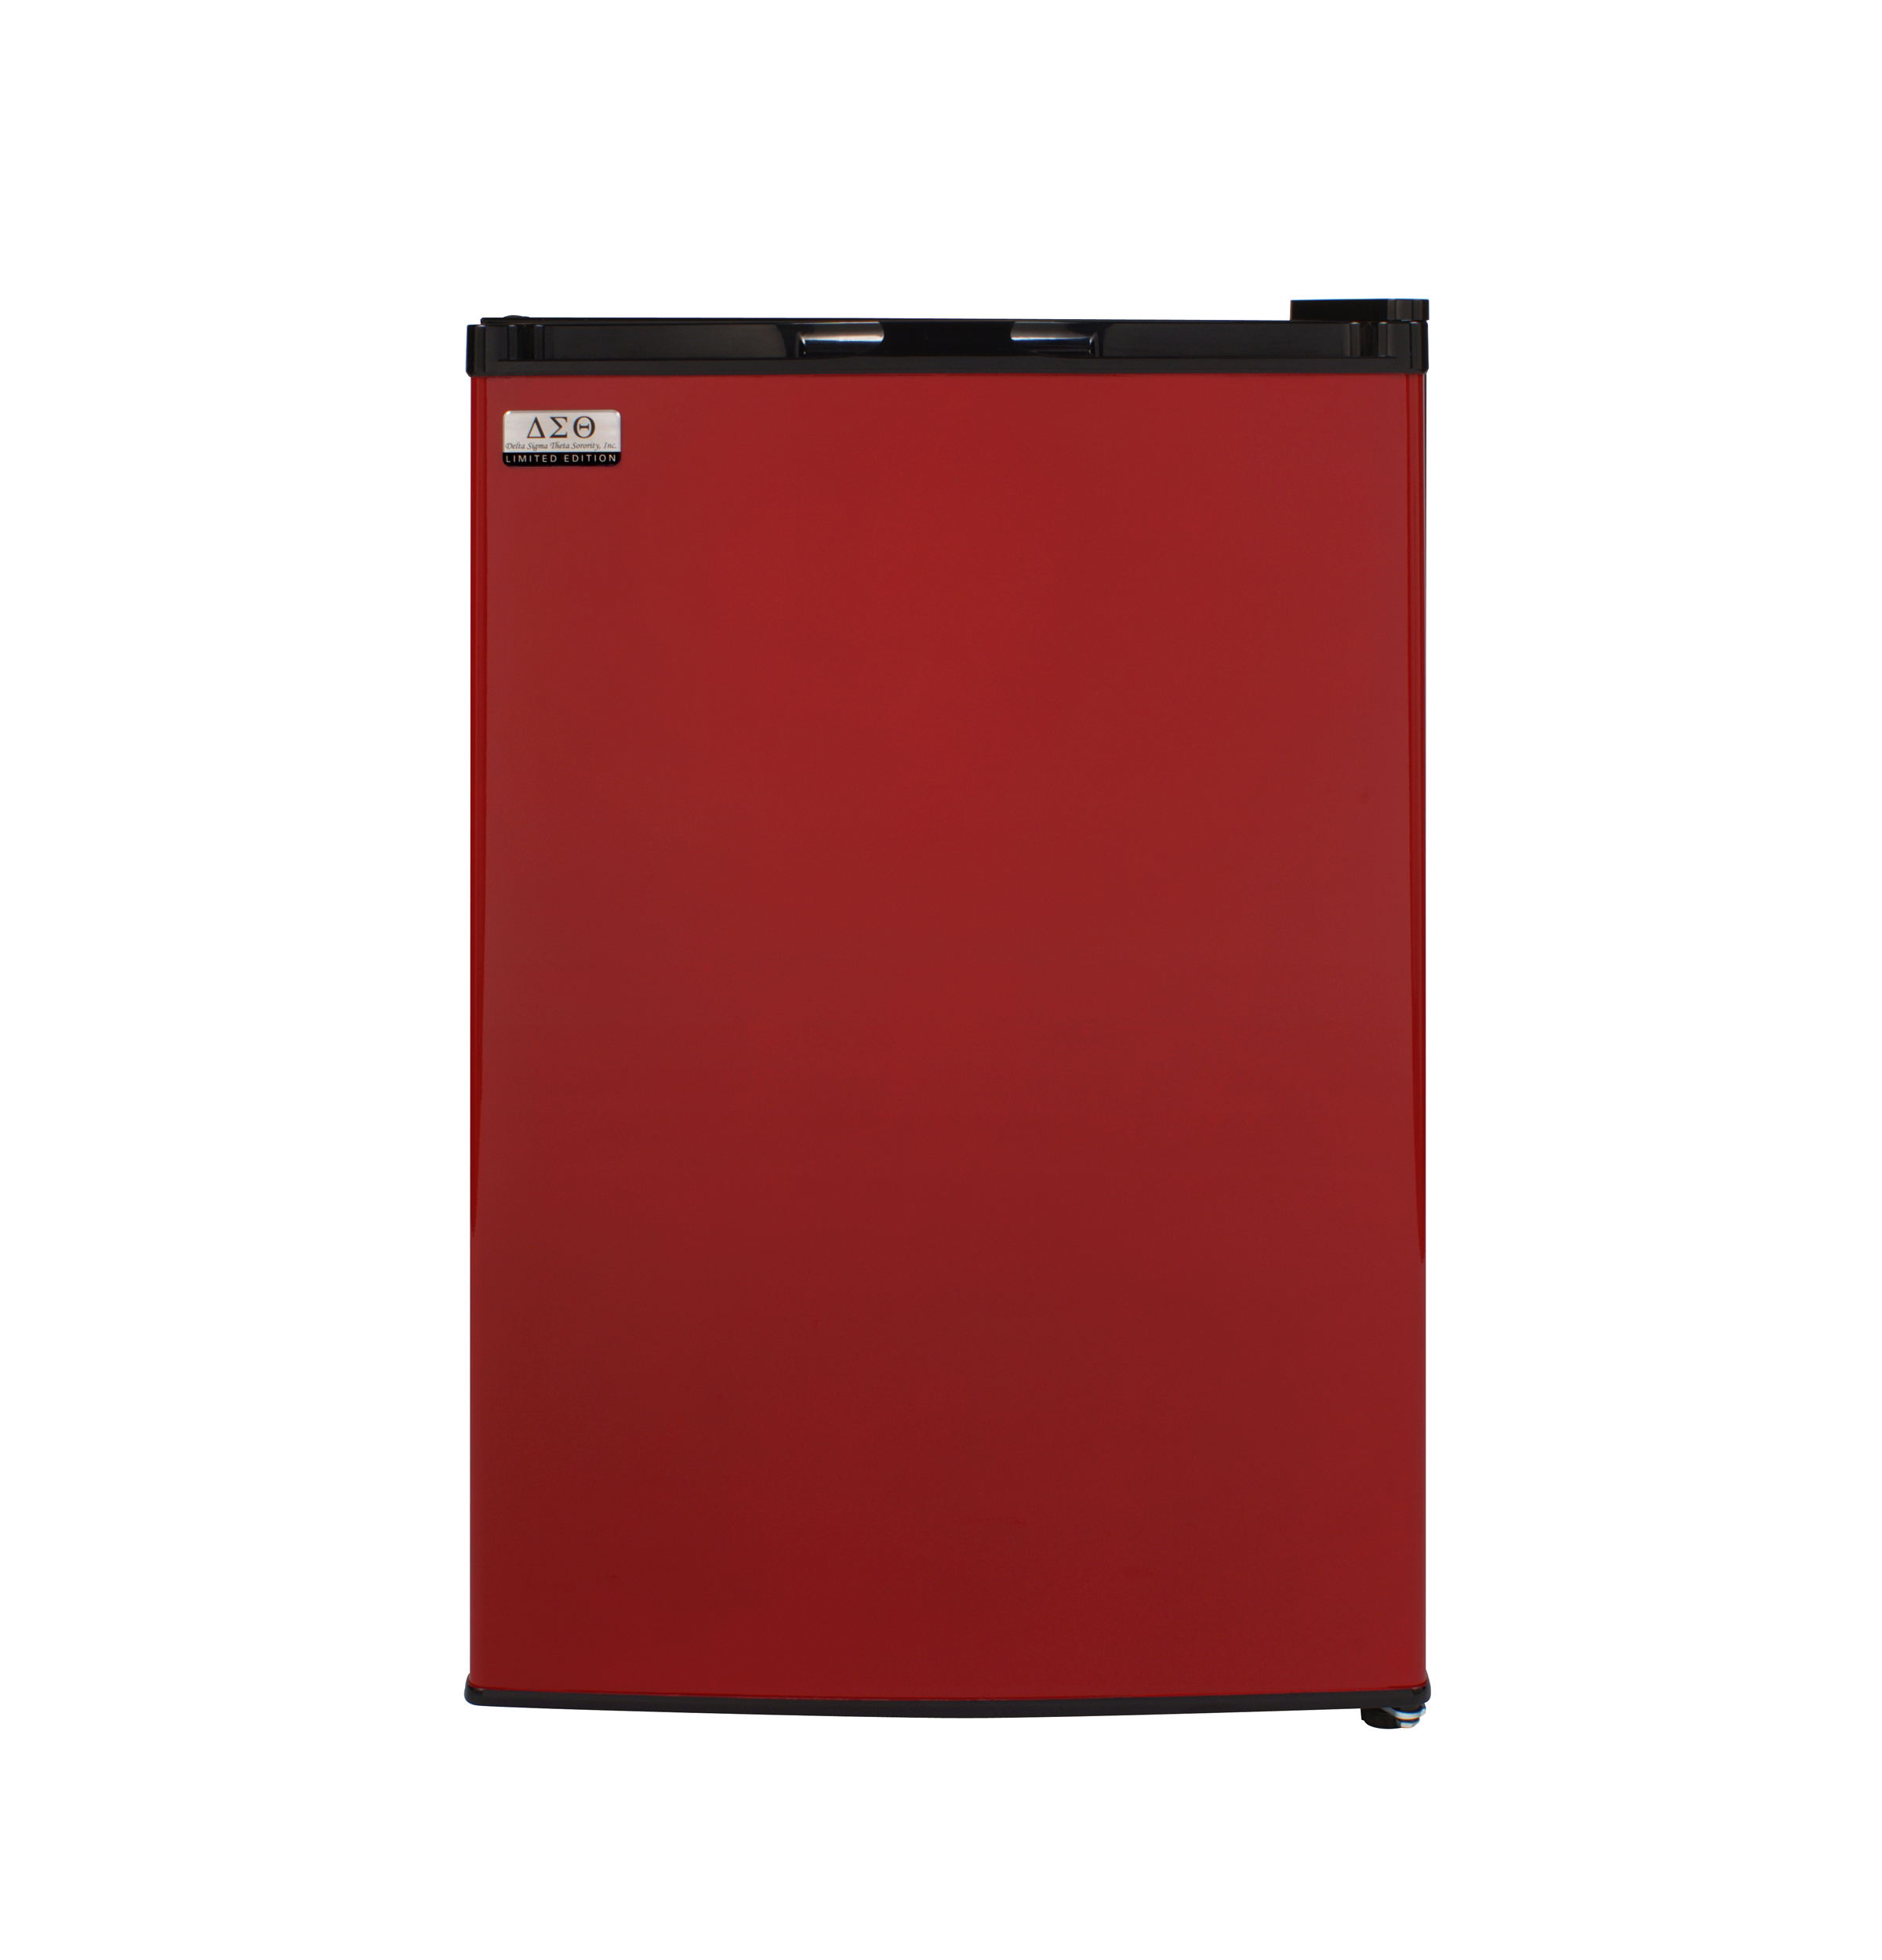 Delta Sigma Theta ENERGY STAR® 4.5 Cu. Ft. Compact Refrigerator